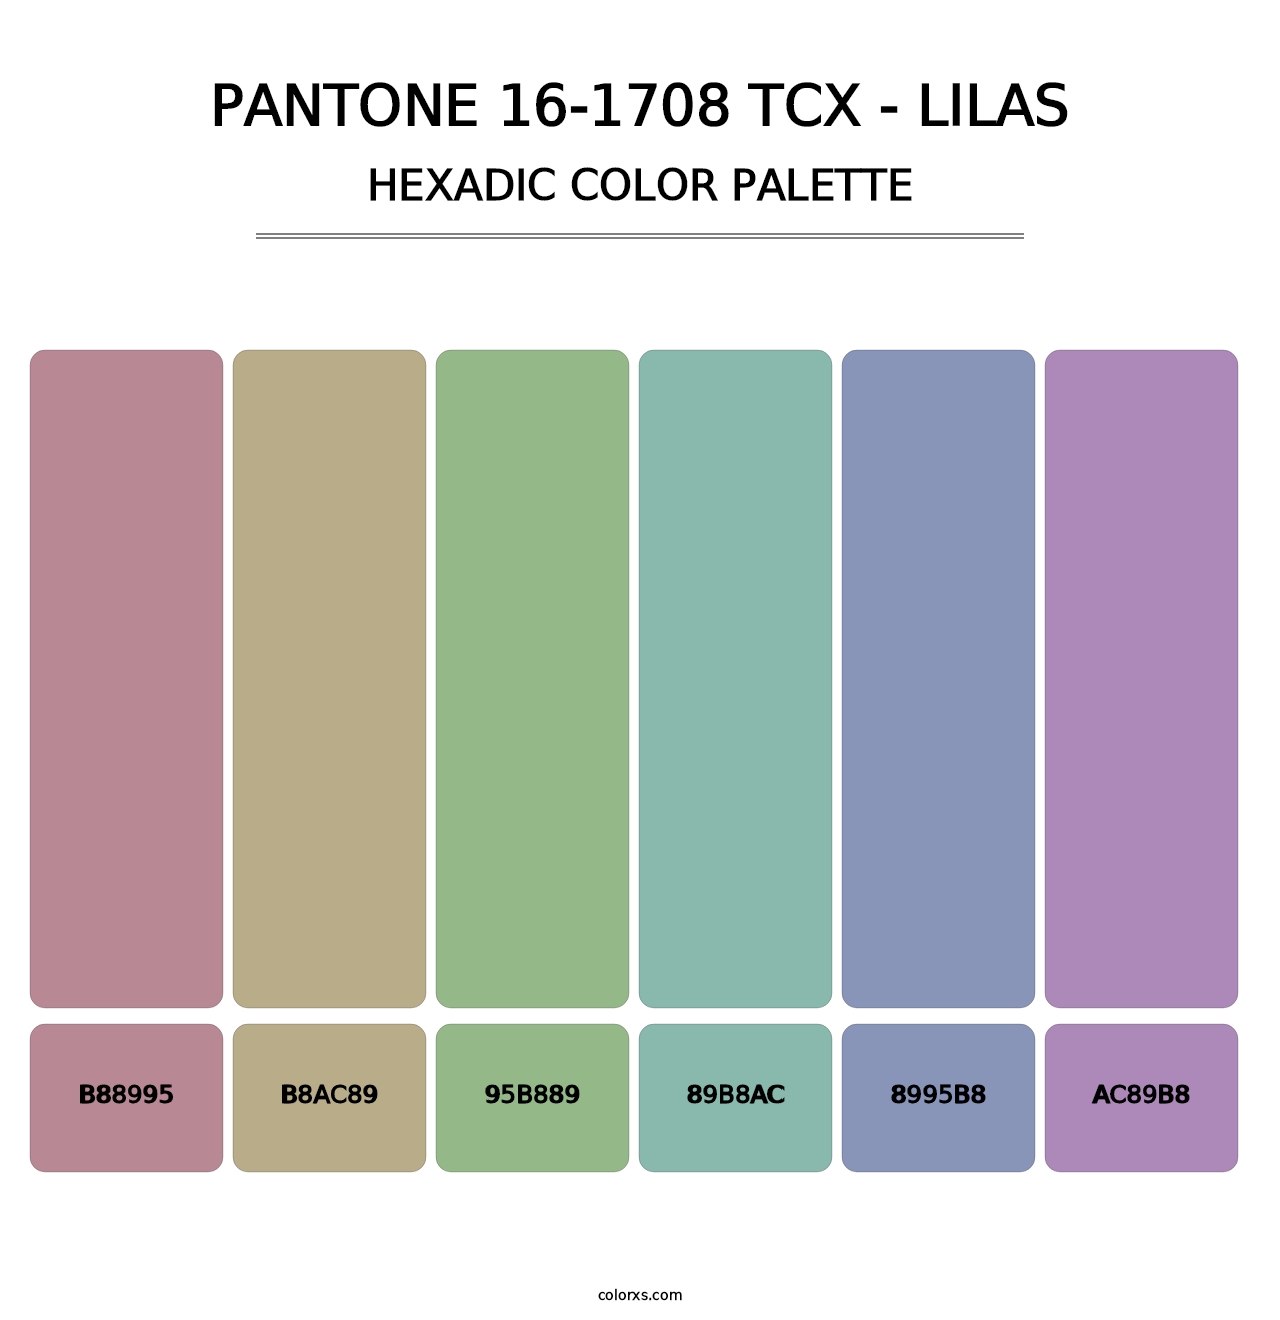 PANTONE 16-1708 TCX - Lilas - Hexadic Color Palette